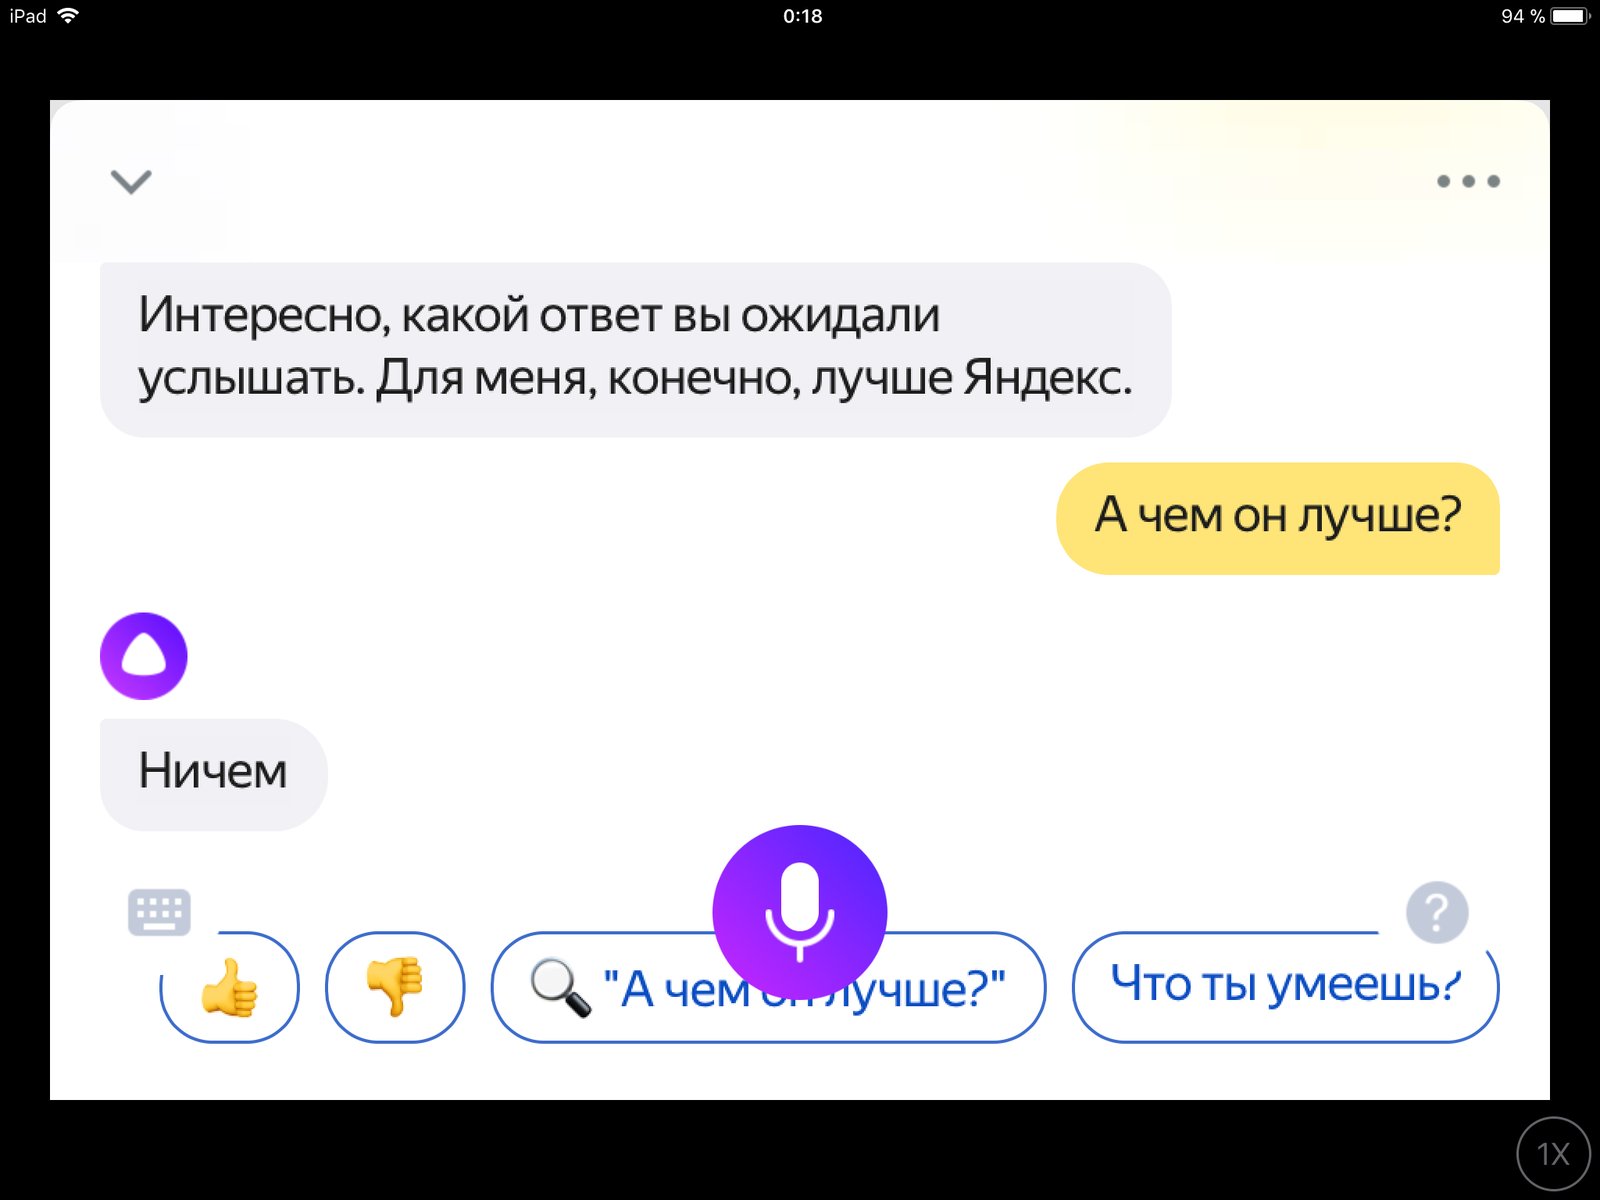 Which is better: Yandex or Google? - My, Artificial Intelligence, Appendix, Yandex., Google, Search, Yandex Alice